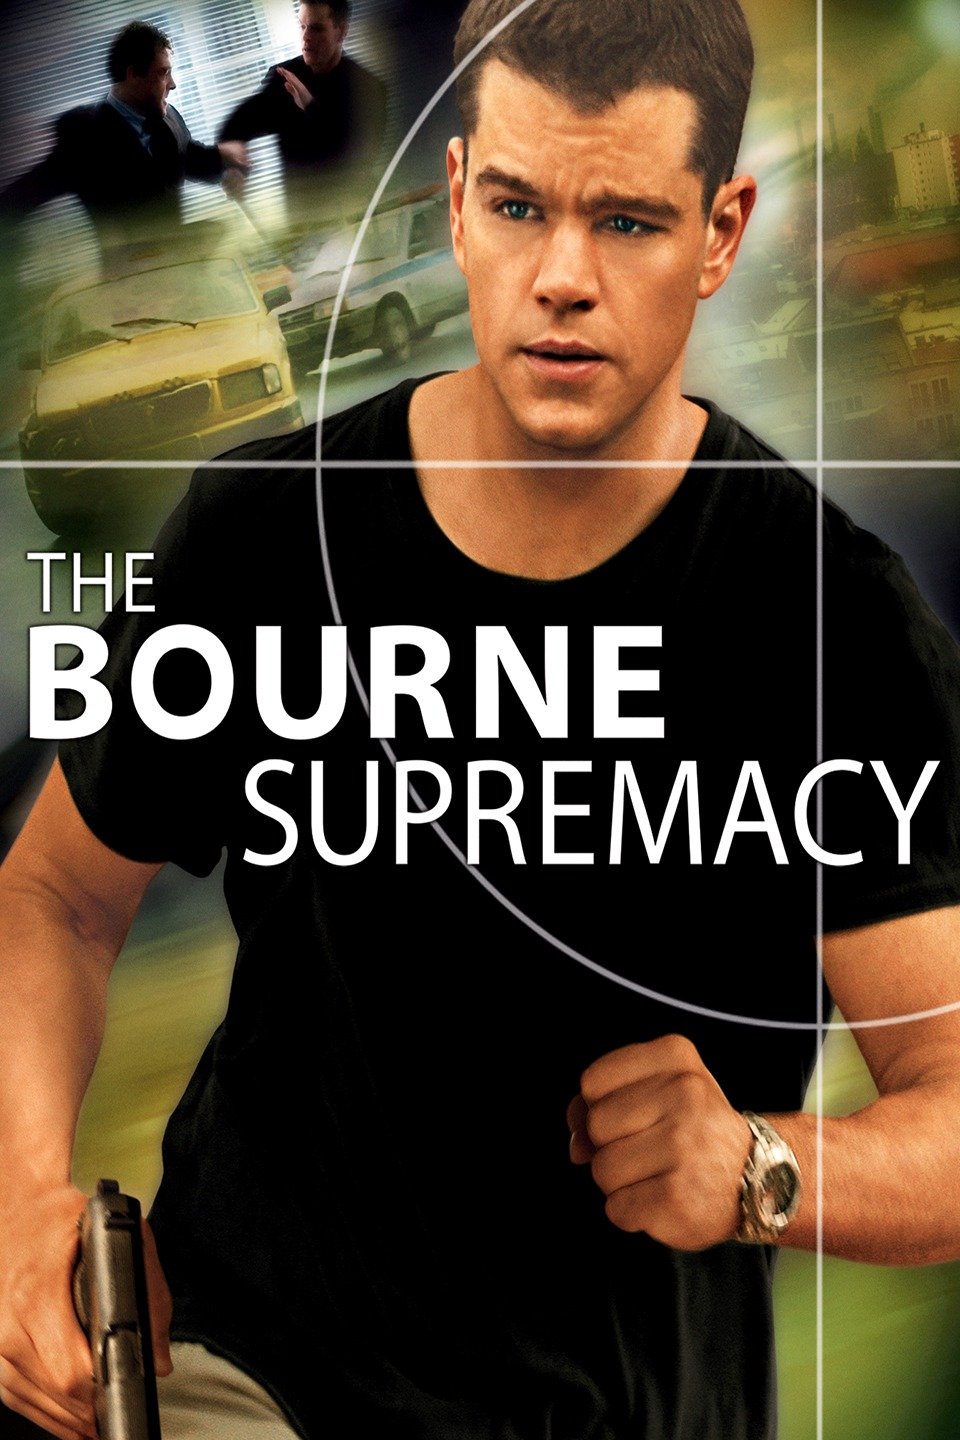 [MINI Super-HQ] The Bourne Supremacy (2004) ล่าจารชน ยอดคนอันตราย ภาค 2 [1080p] [พากย์ไทย DTS + เสียงอังกฤษ DTS] [บรรยายไทย + อังกฤษ] [เสียงไทย + ซับไทย] [ONE2UP]